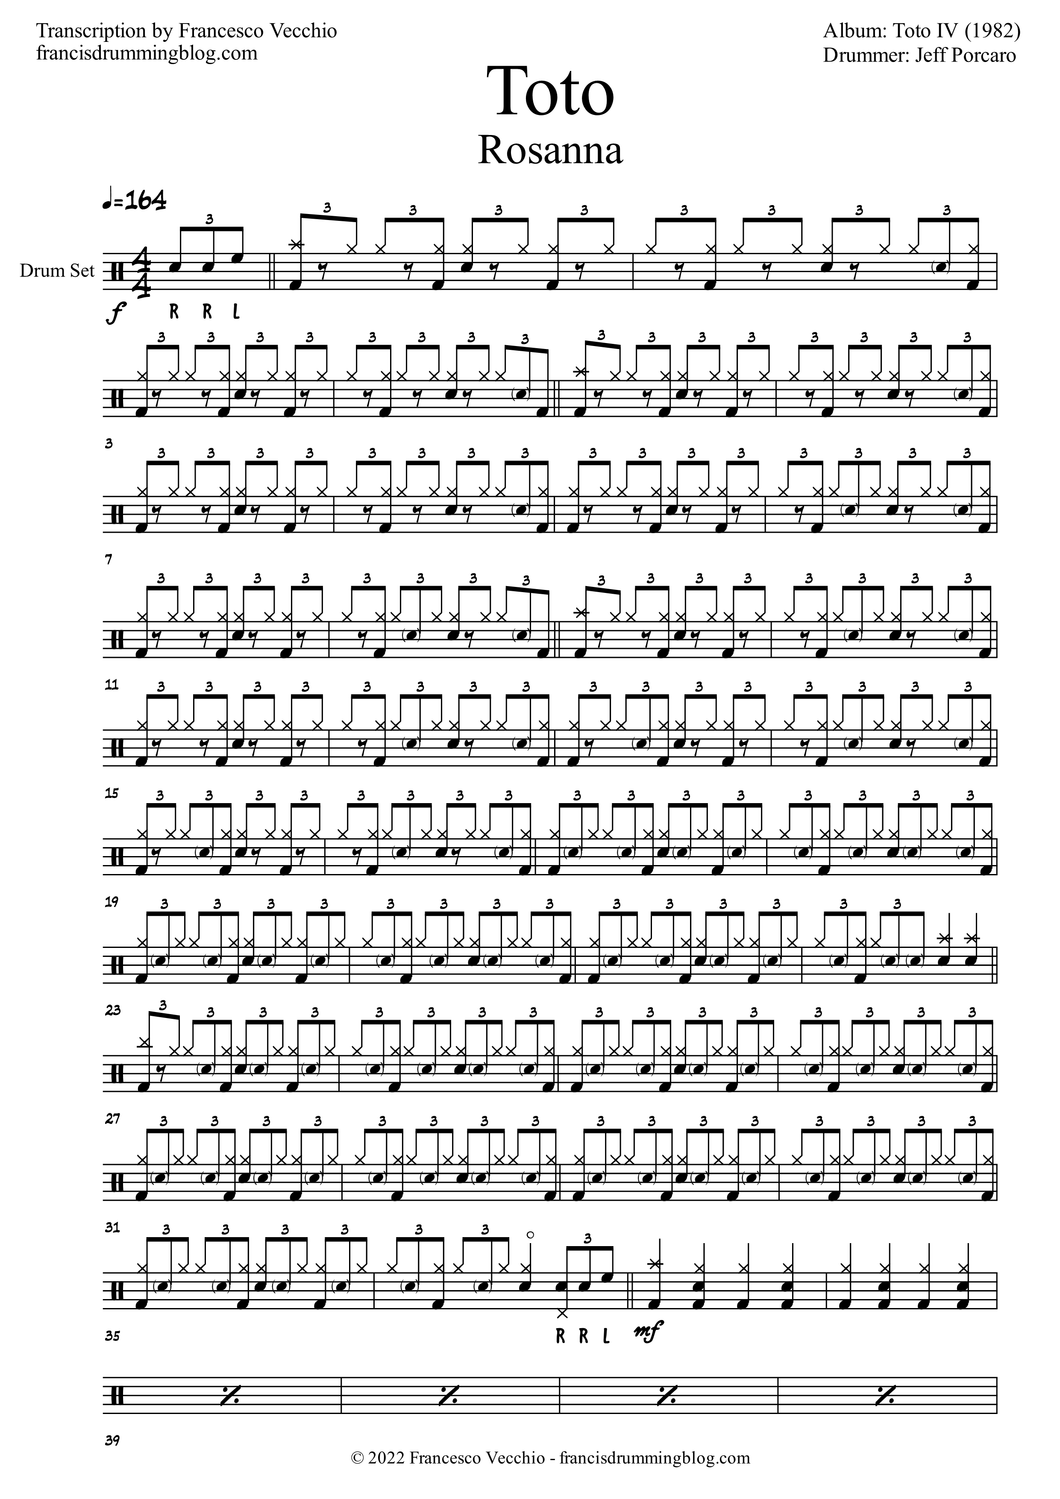 Rosanna - Toto - Full Drum Transcription / Drum Sheet Music - FrancisDrummingBlog.com